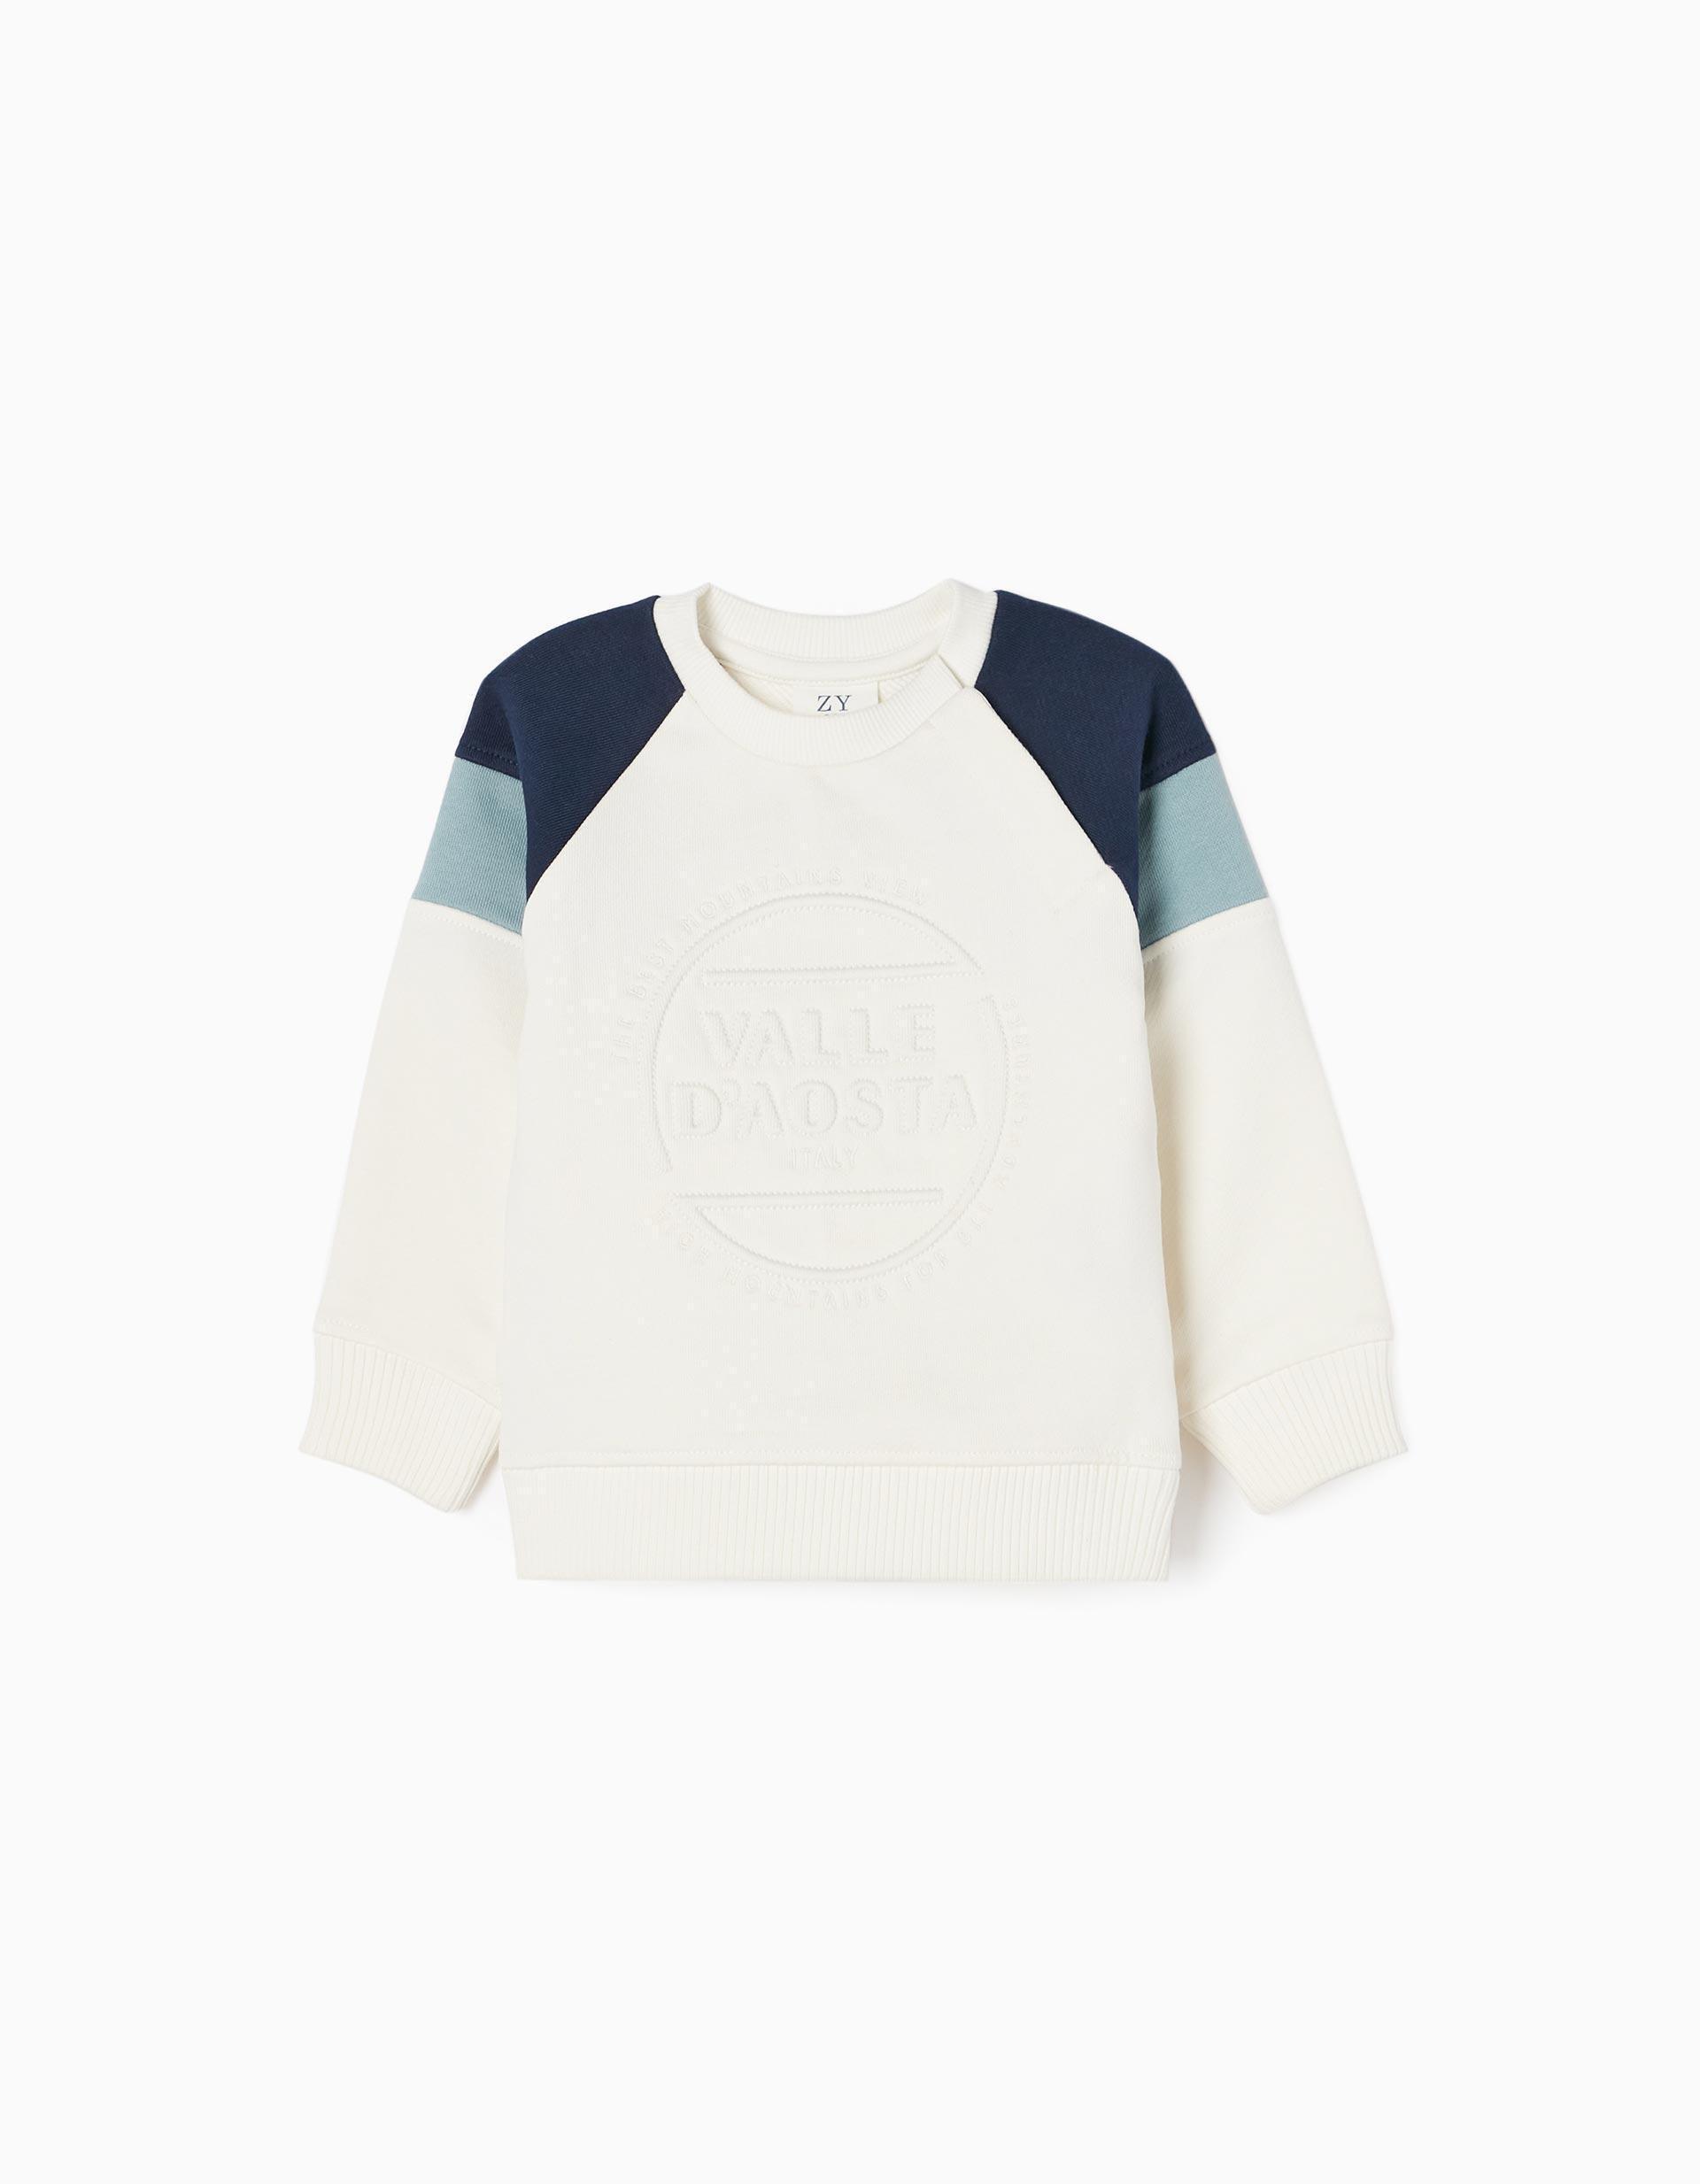 Gant - White Cotton Sweatshirt, Baby Boys